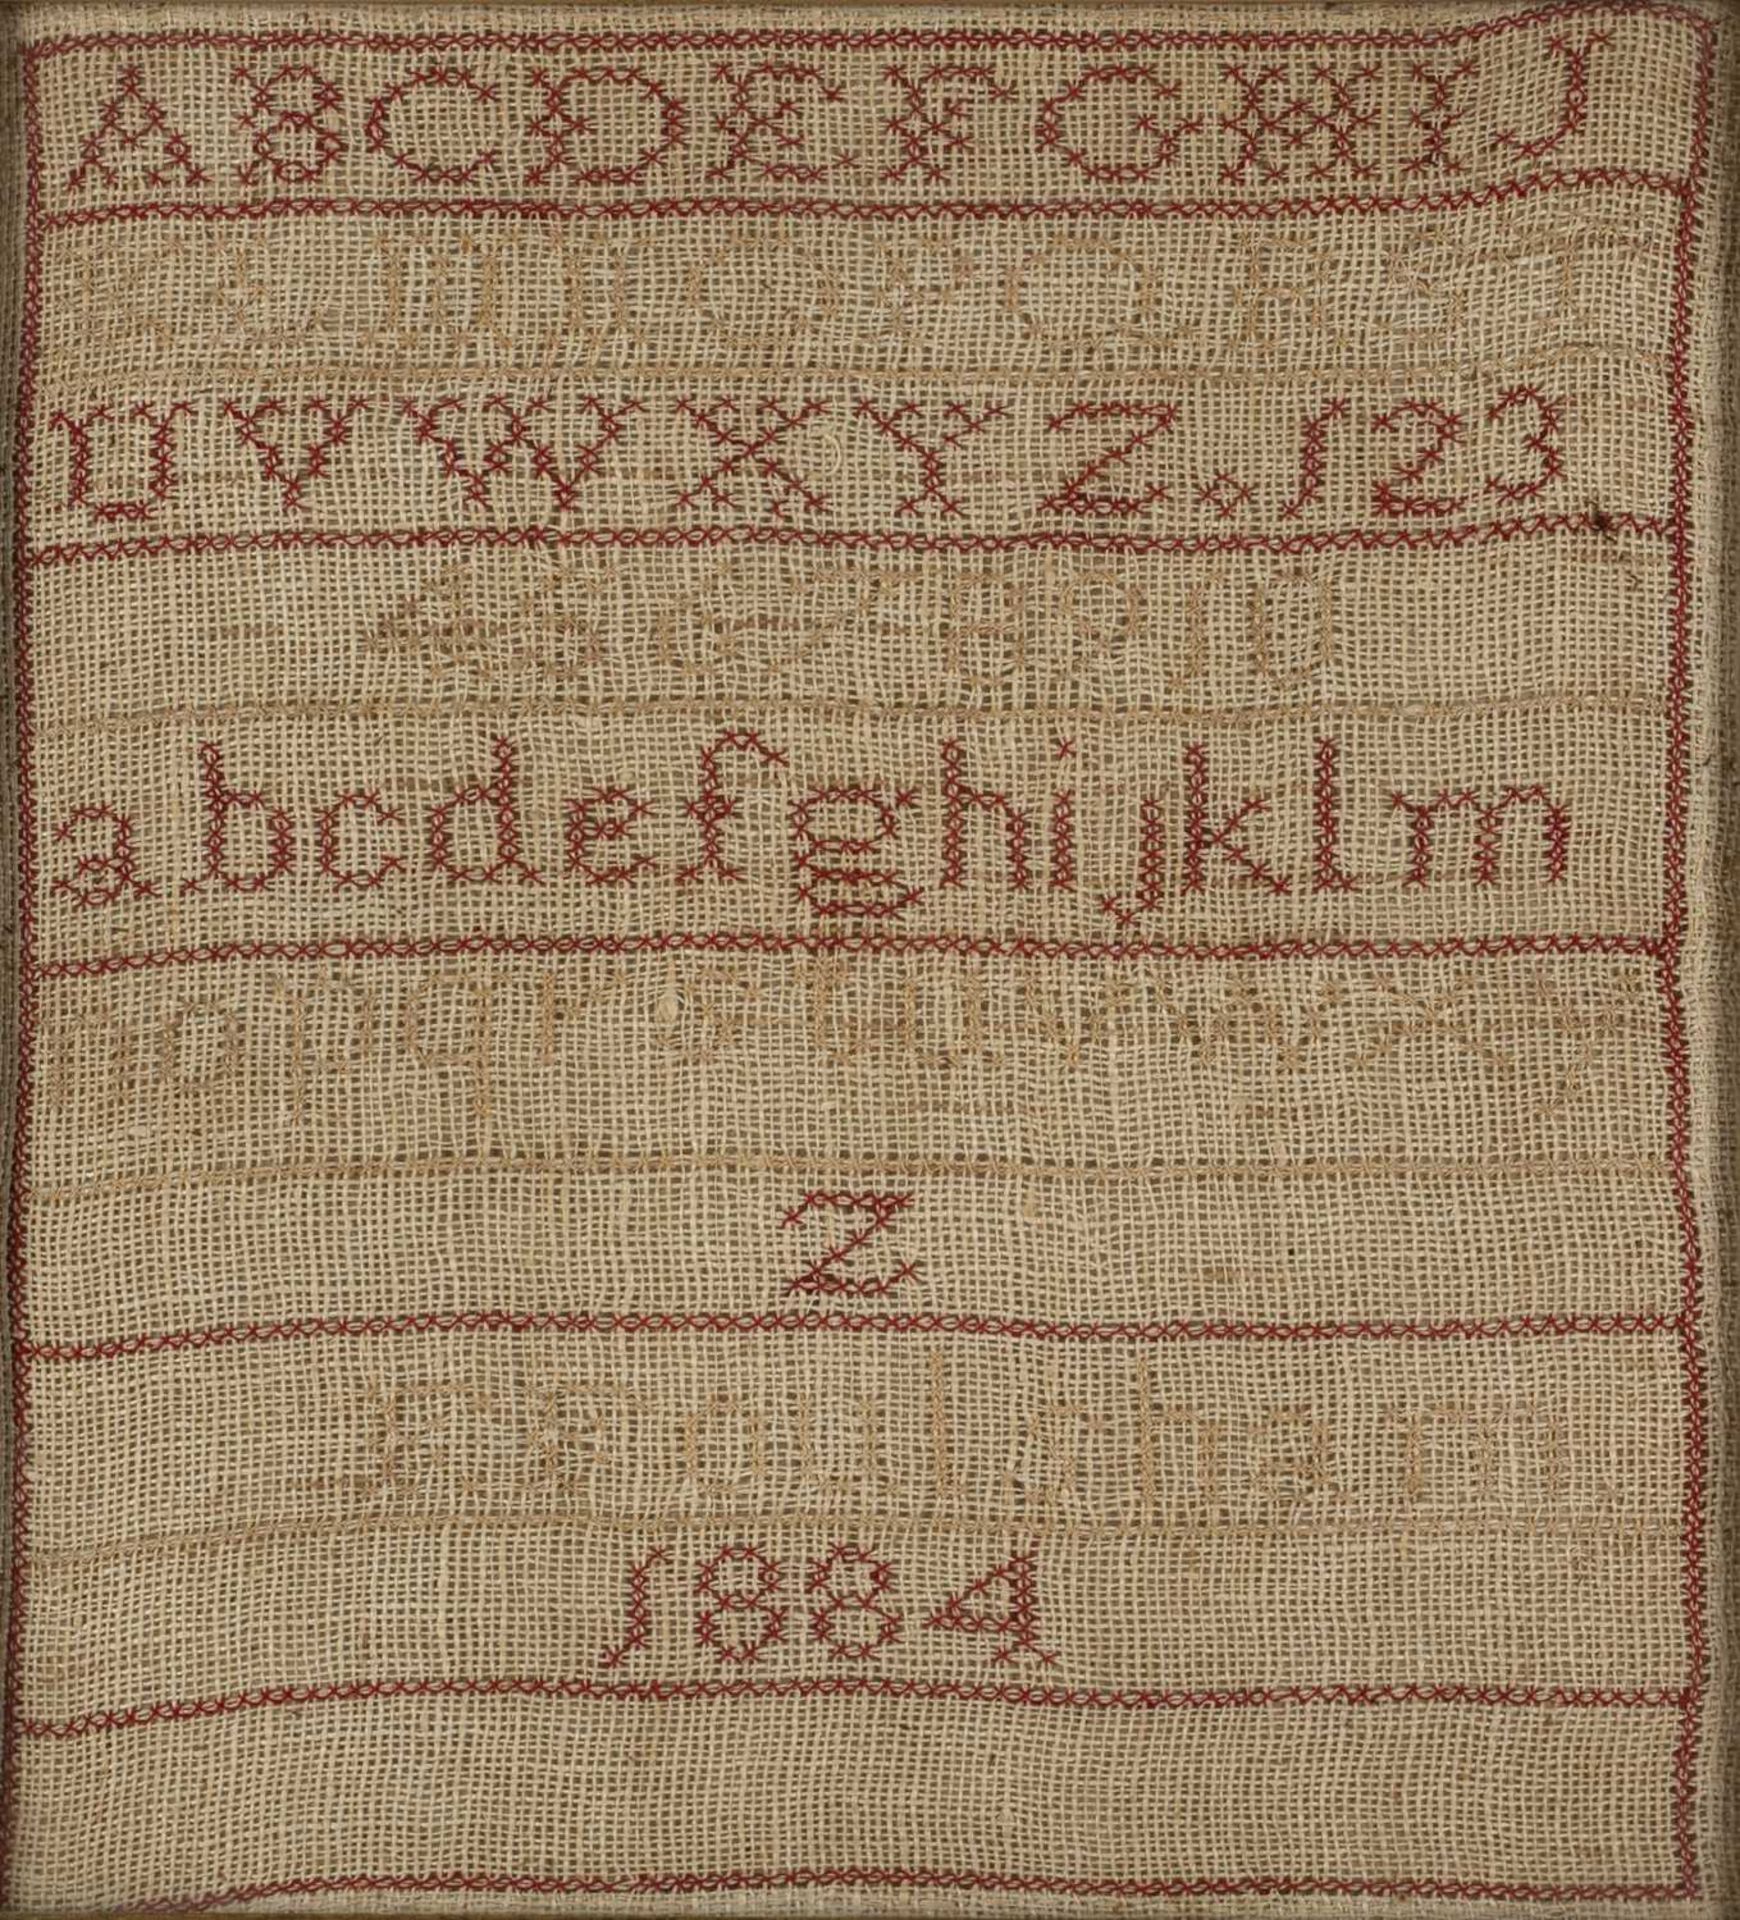 Two antique needlework samplers the larger monochrome alphabet sampler reads 'Elizabeth Pipe, - Image 2 of 6